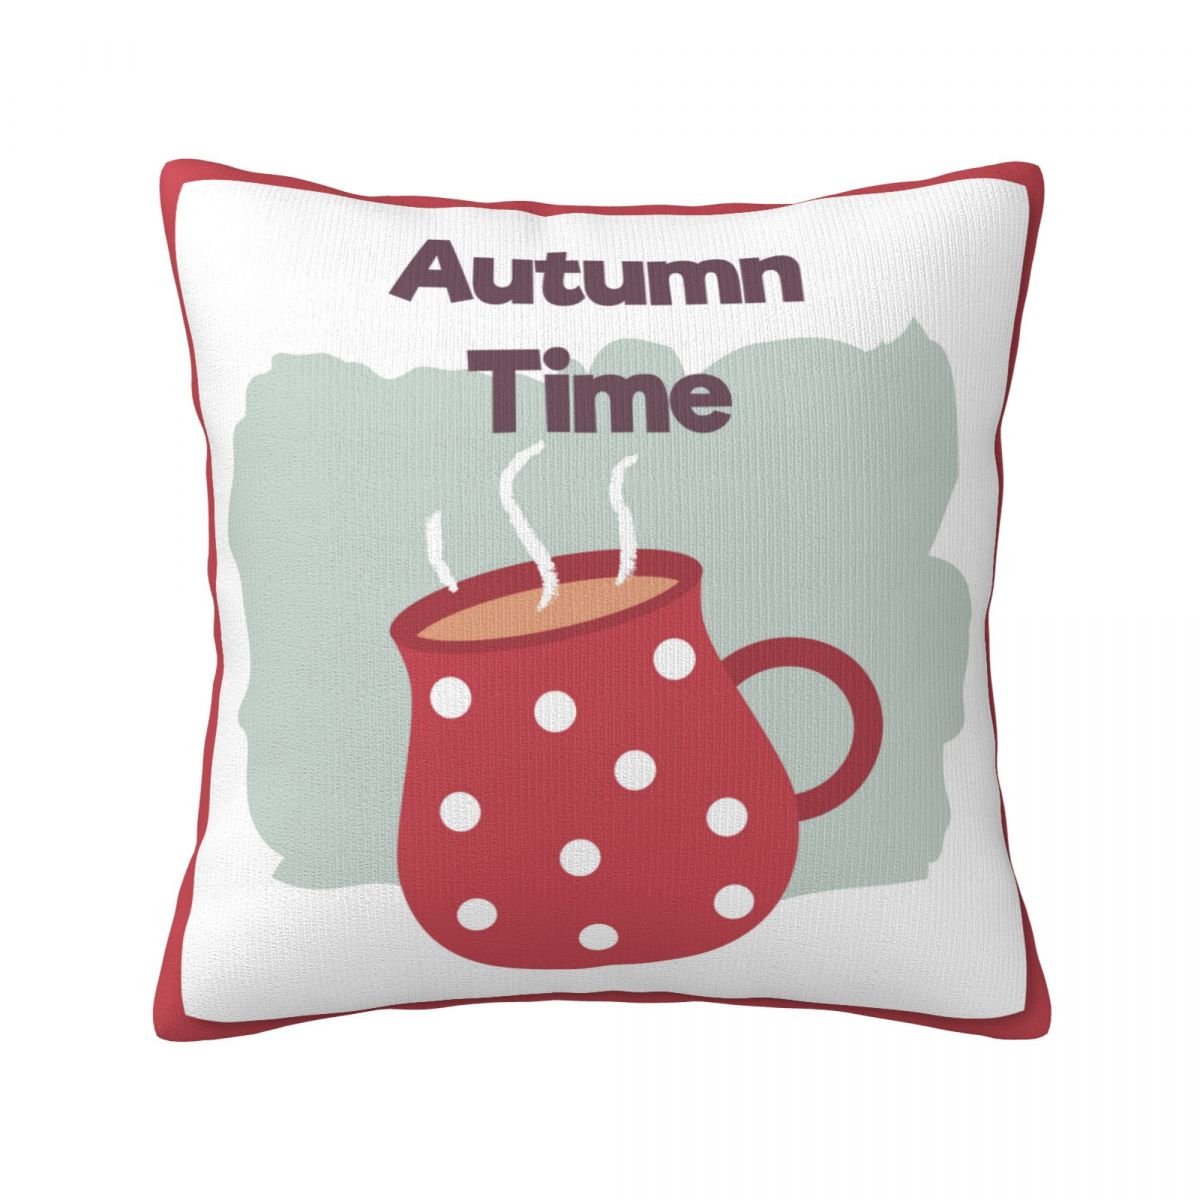 Autumn Time Throw Pillow Covers 18x18